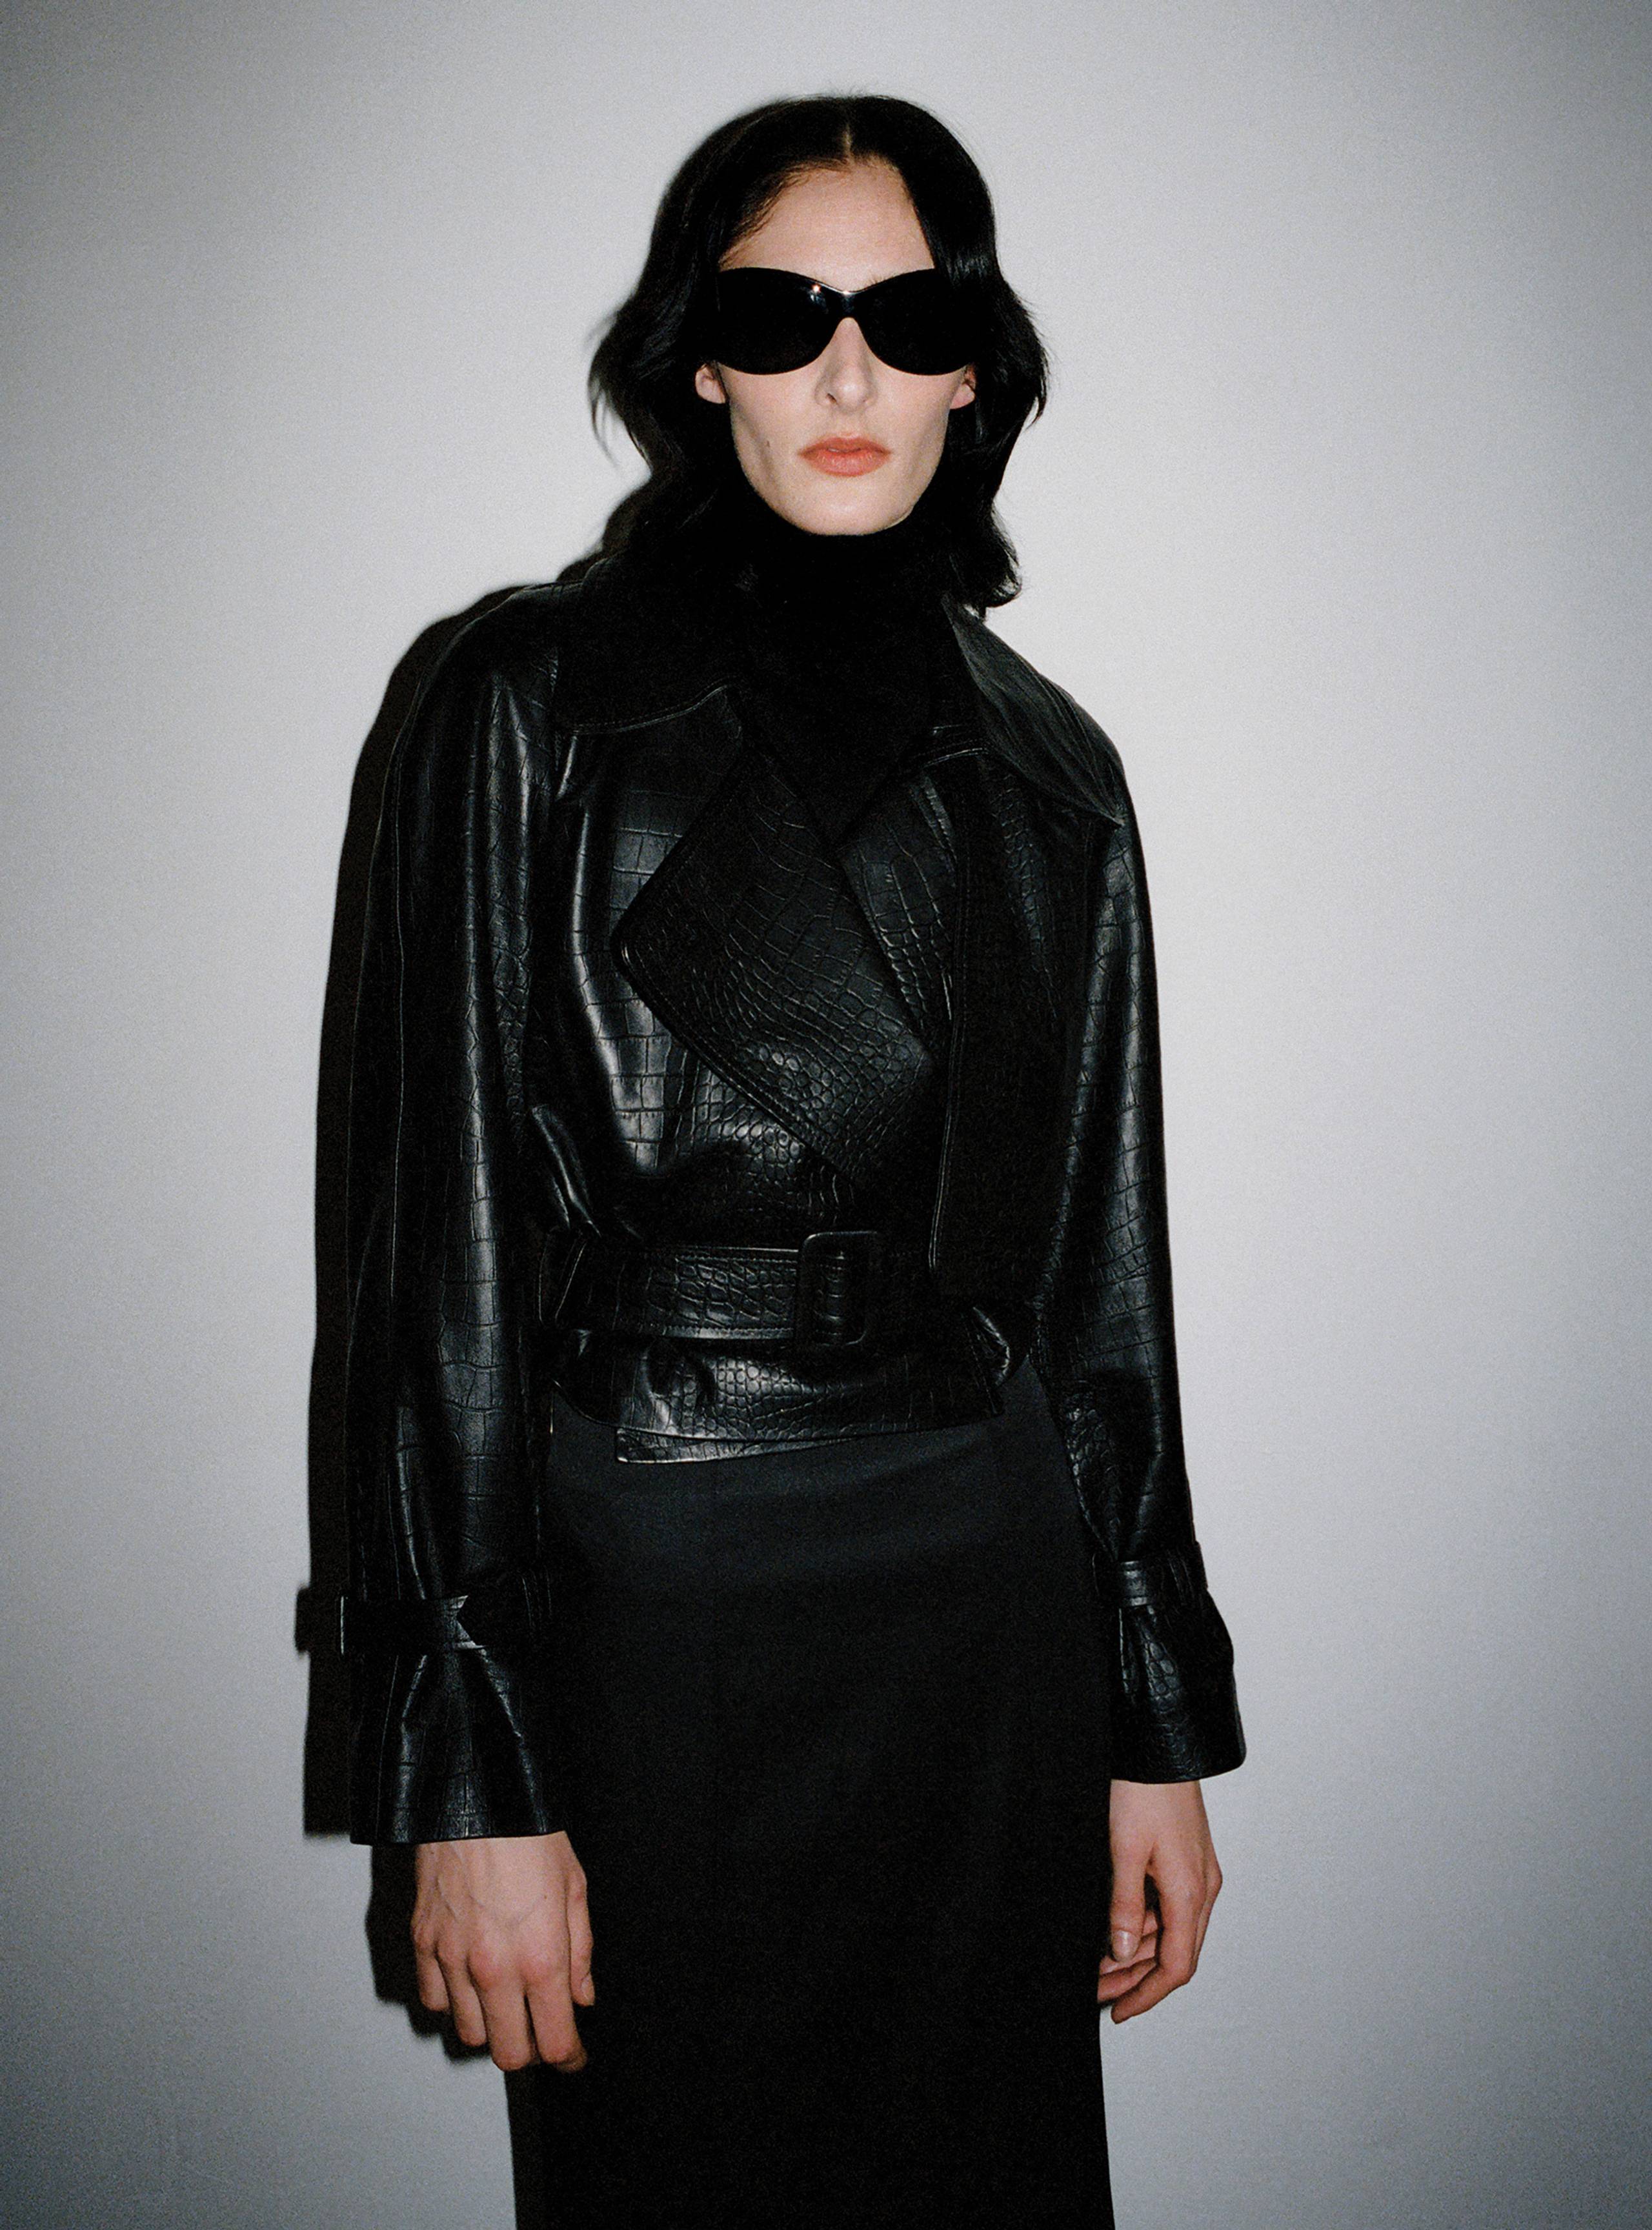 A model wearing the Hatti Croco Black leather jacket